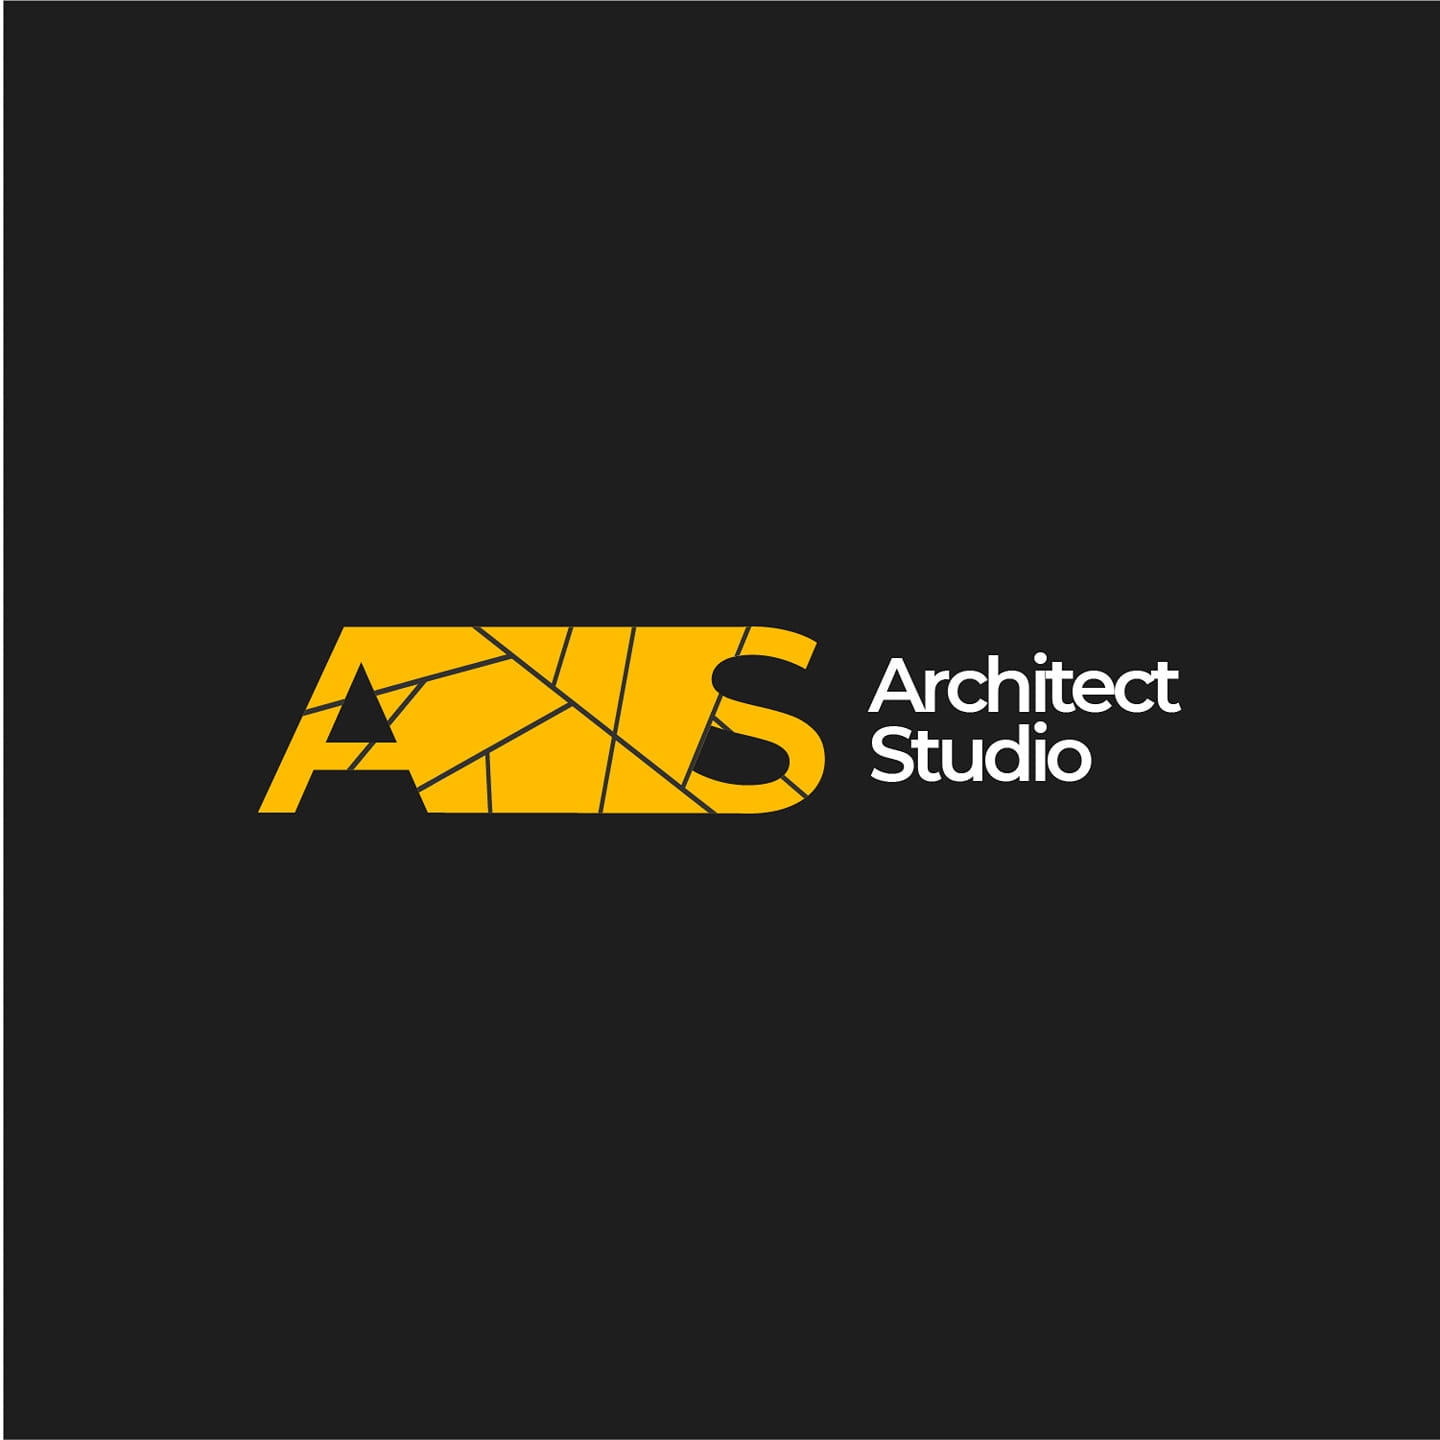 Architect Studio|IT Services|Professional Services